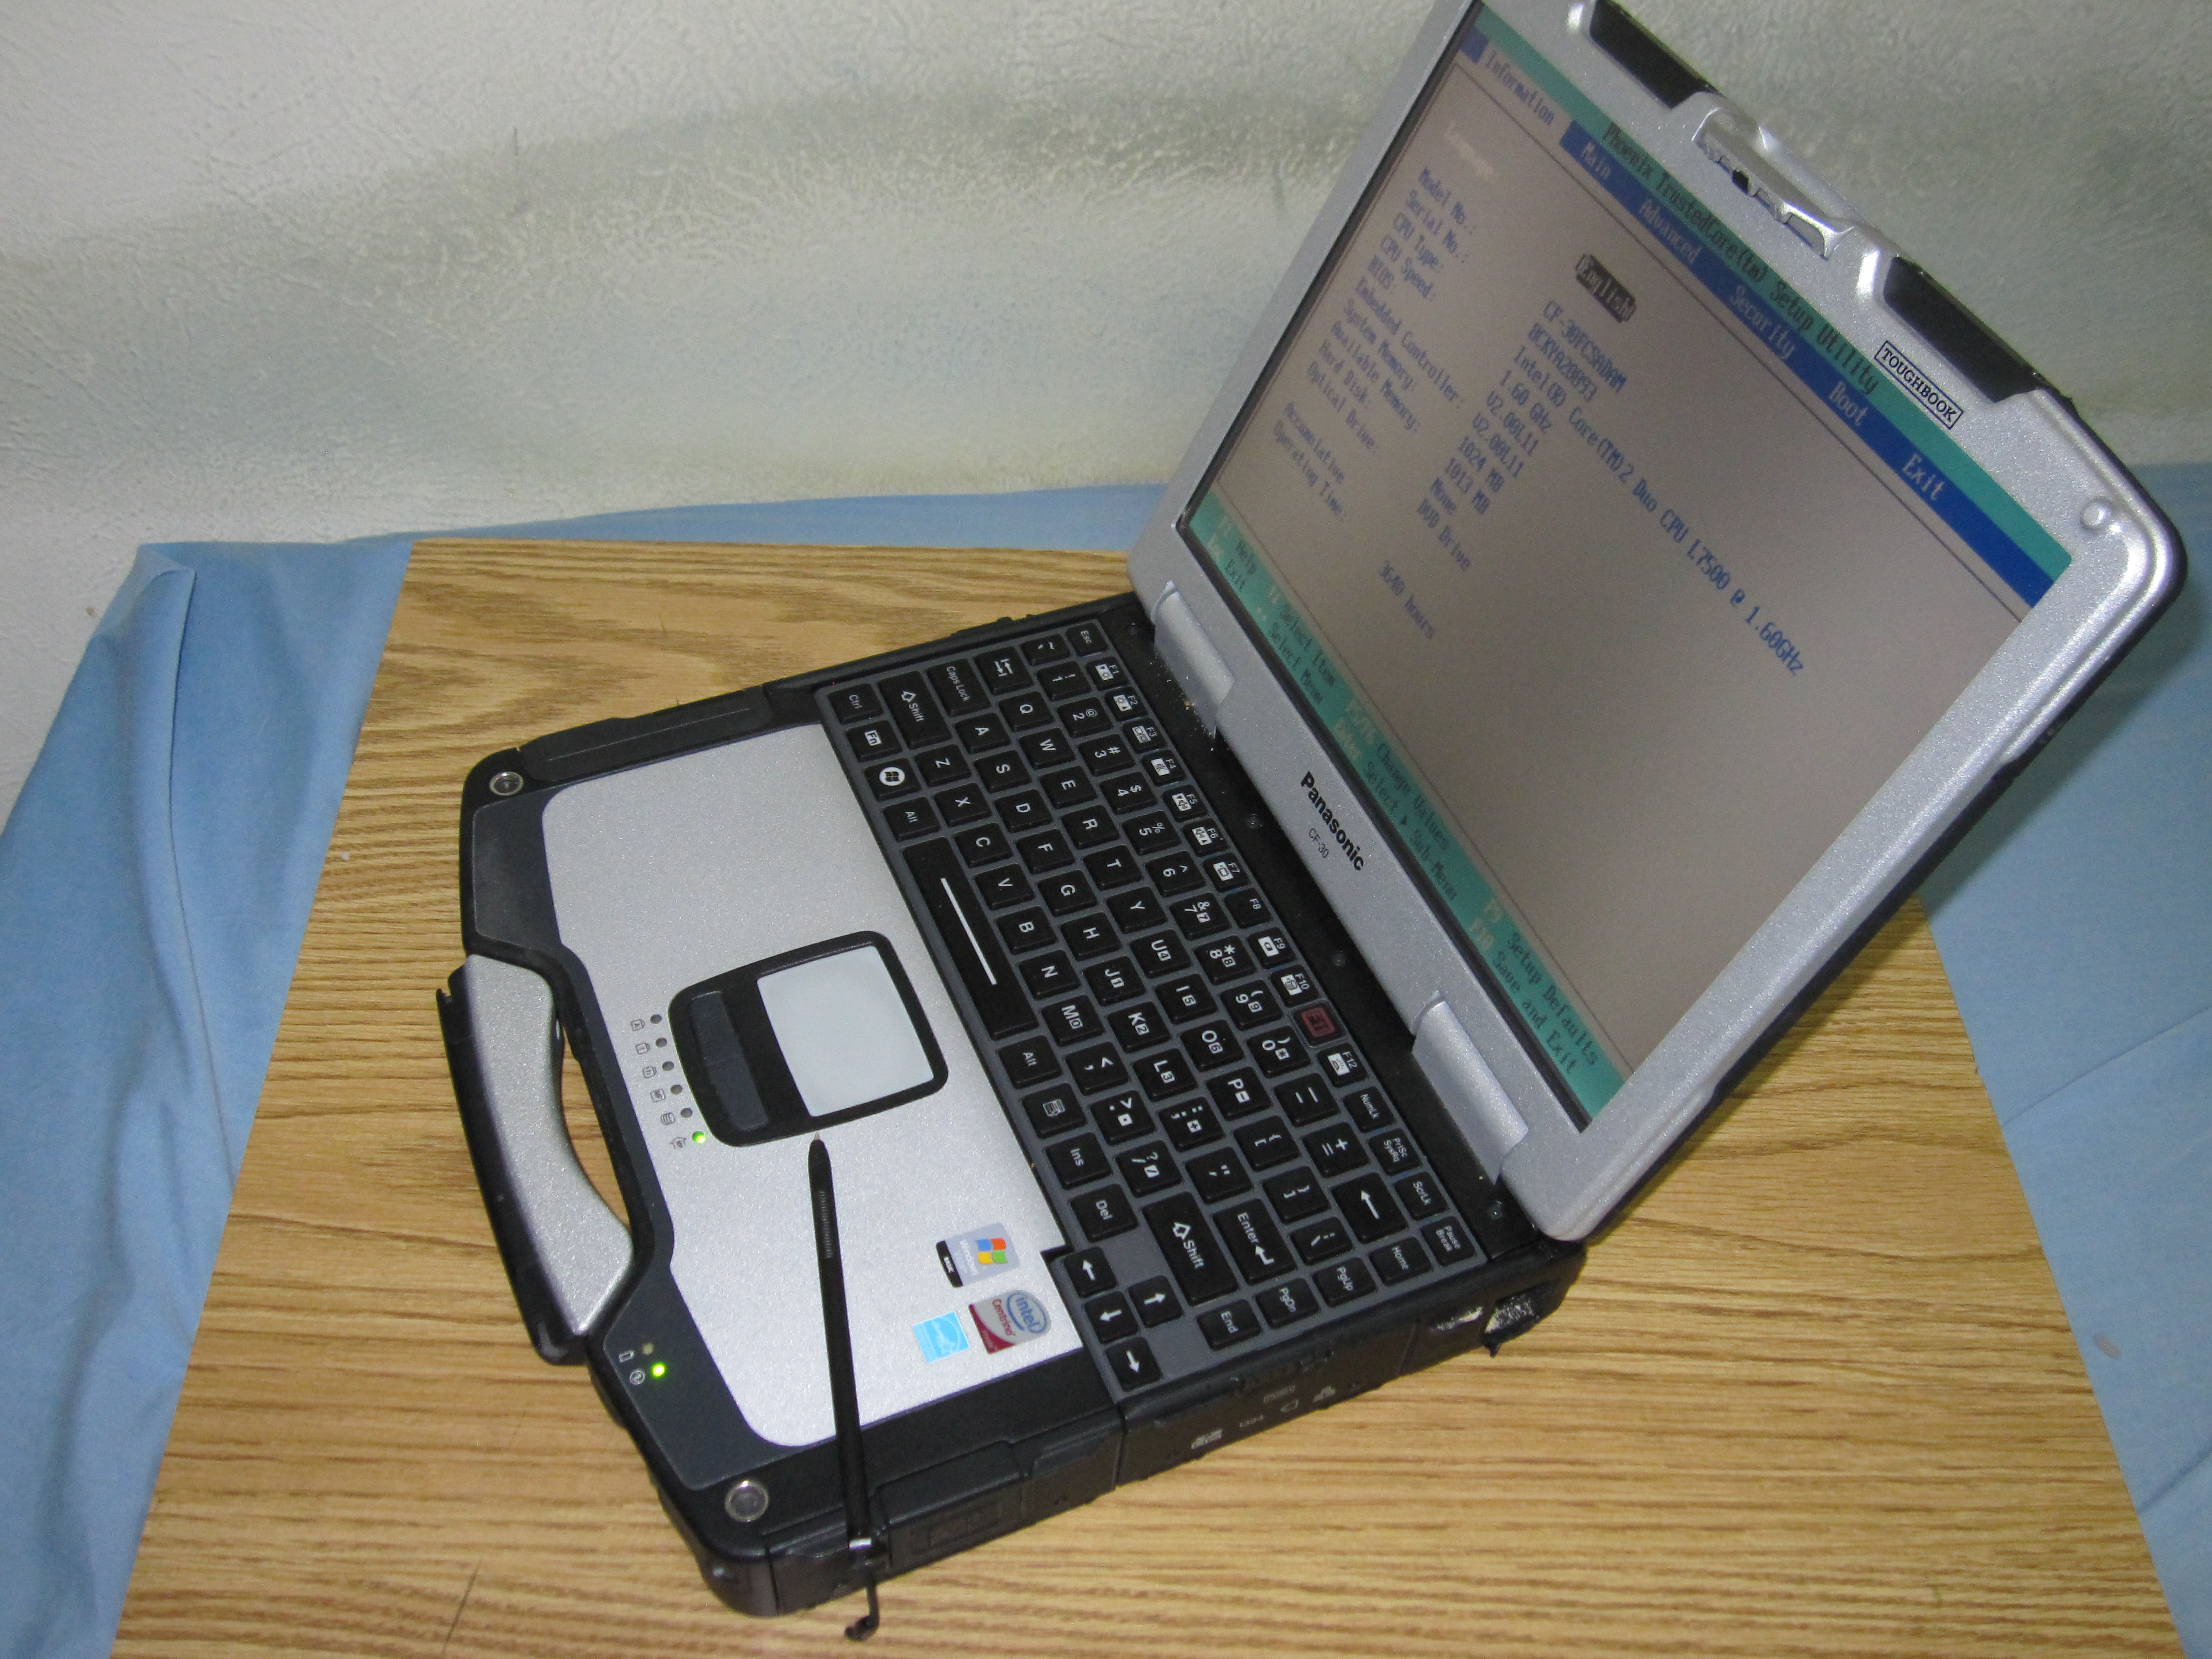 Panasonic ToughBook CF-30 TouchScreen 1.60GHz, 1GB RAM, DVD/CD, NO HARD